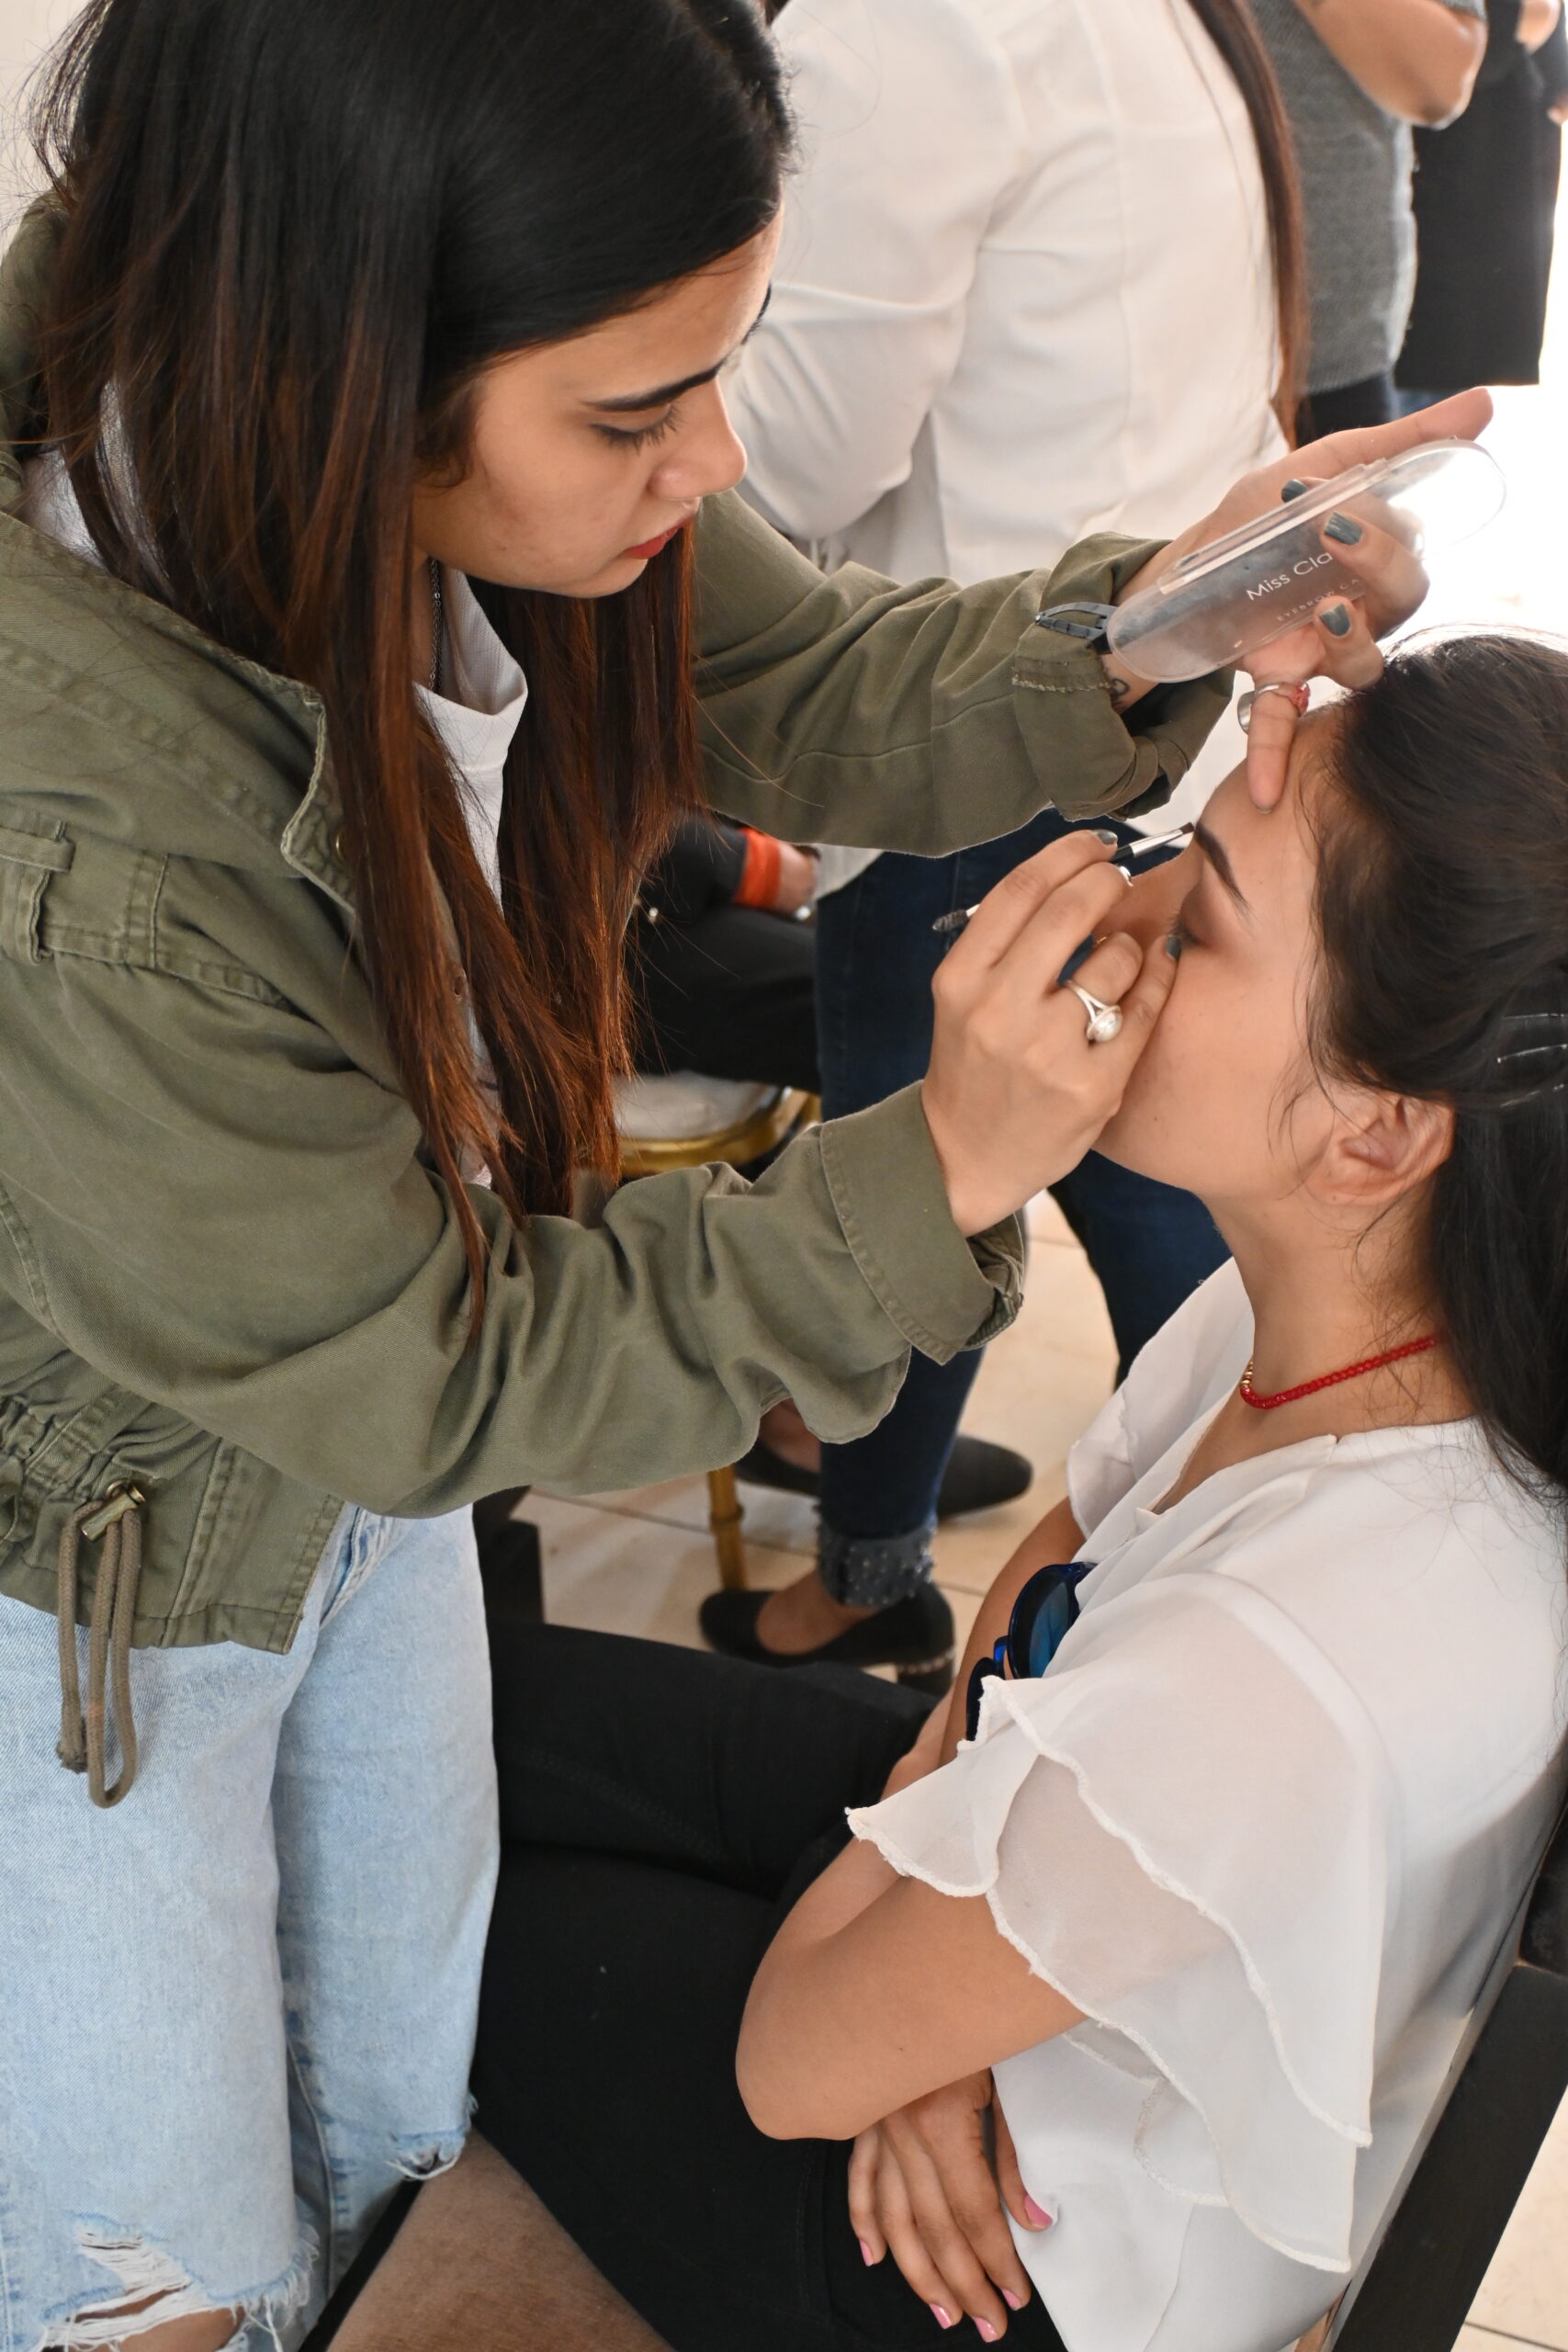 Best Makeup Institute in Delhi - Make U Glam Academy - Megha Thakur